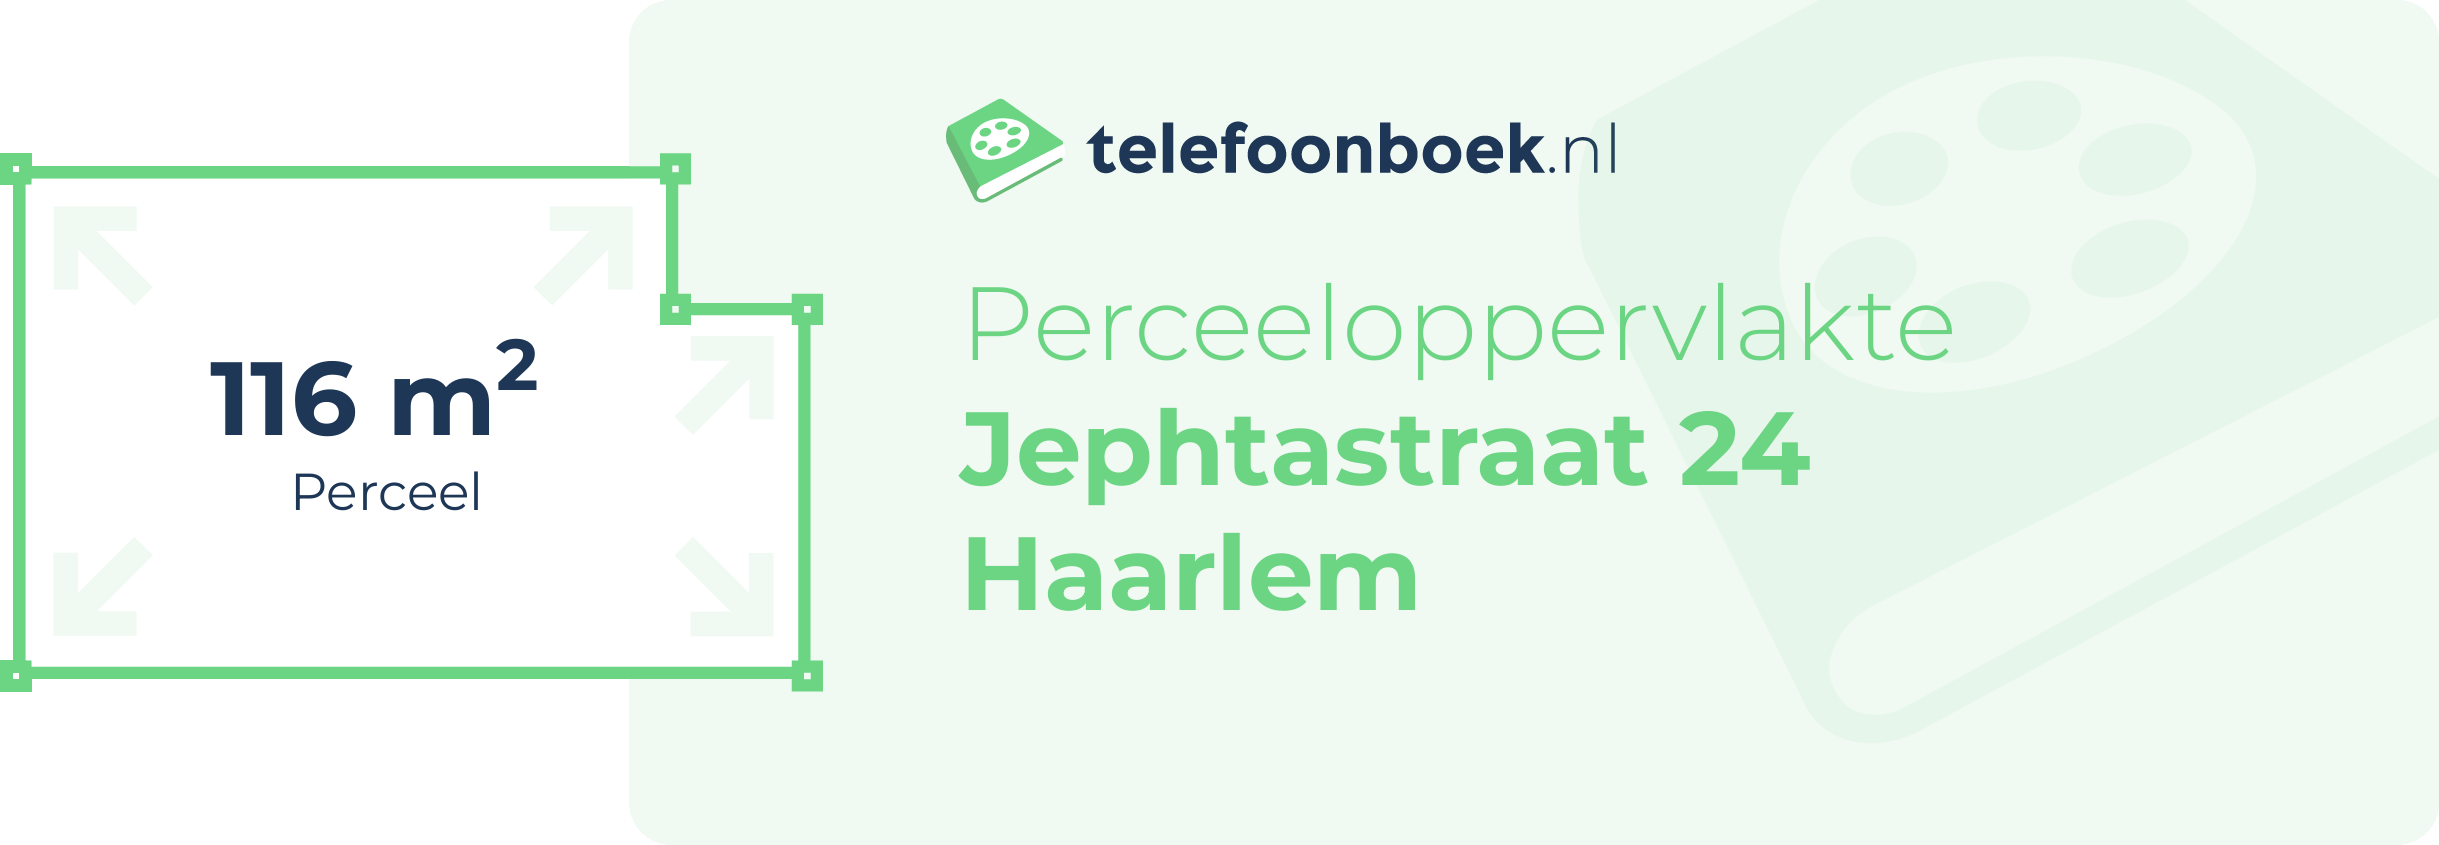 Perceeloppervlakte Jephtastraat 24 Haarlem